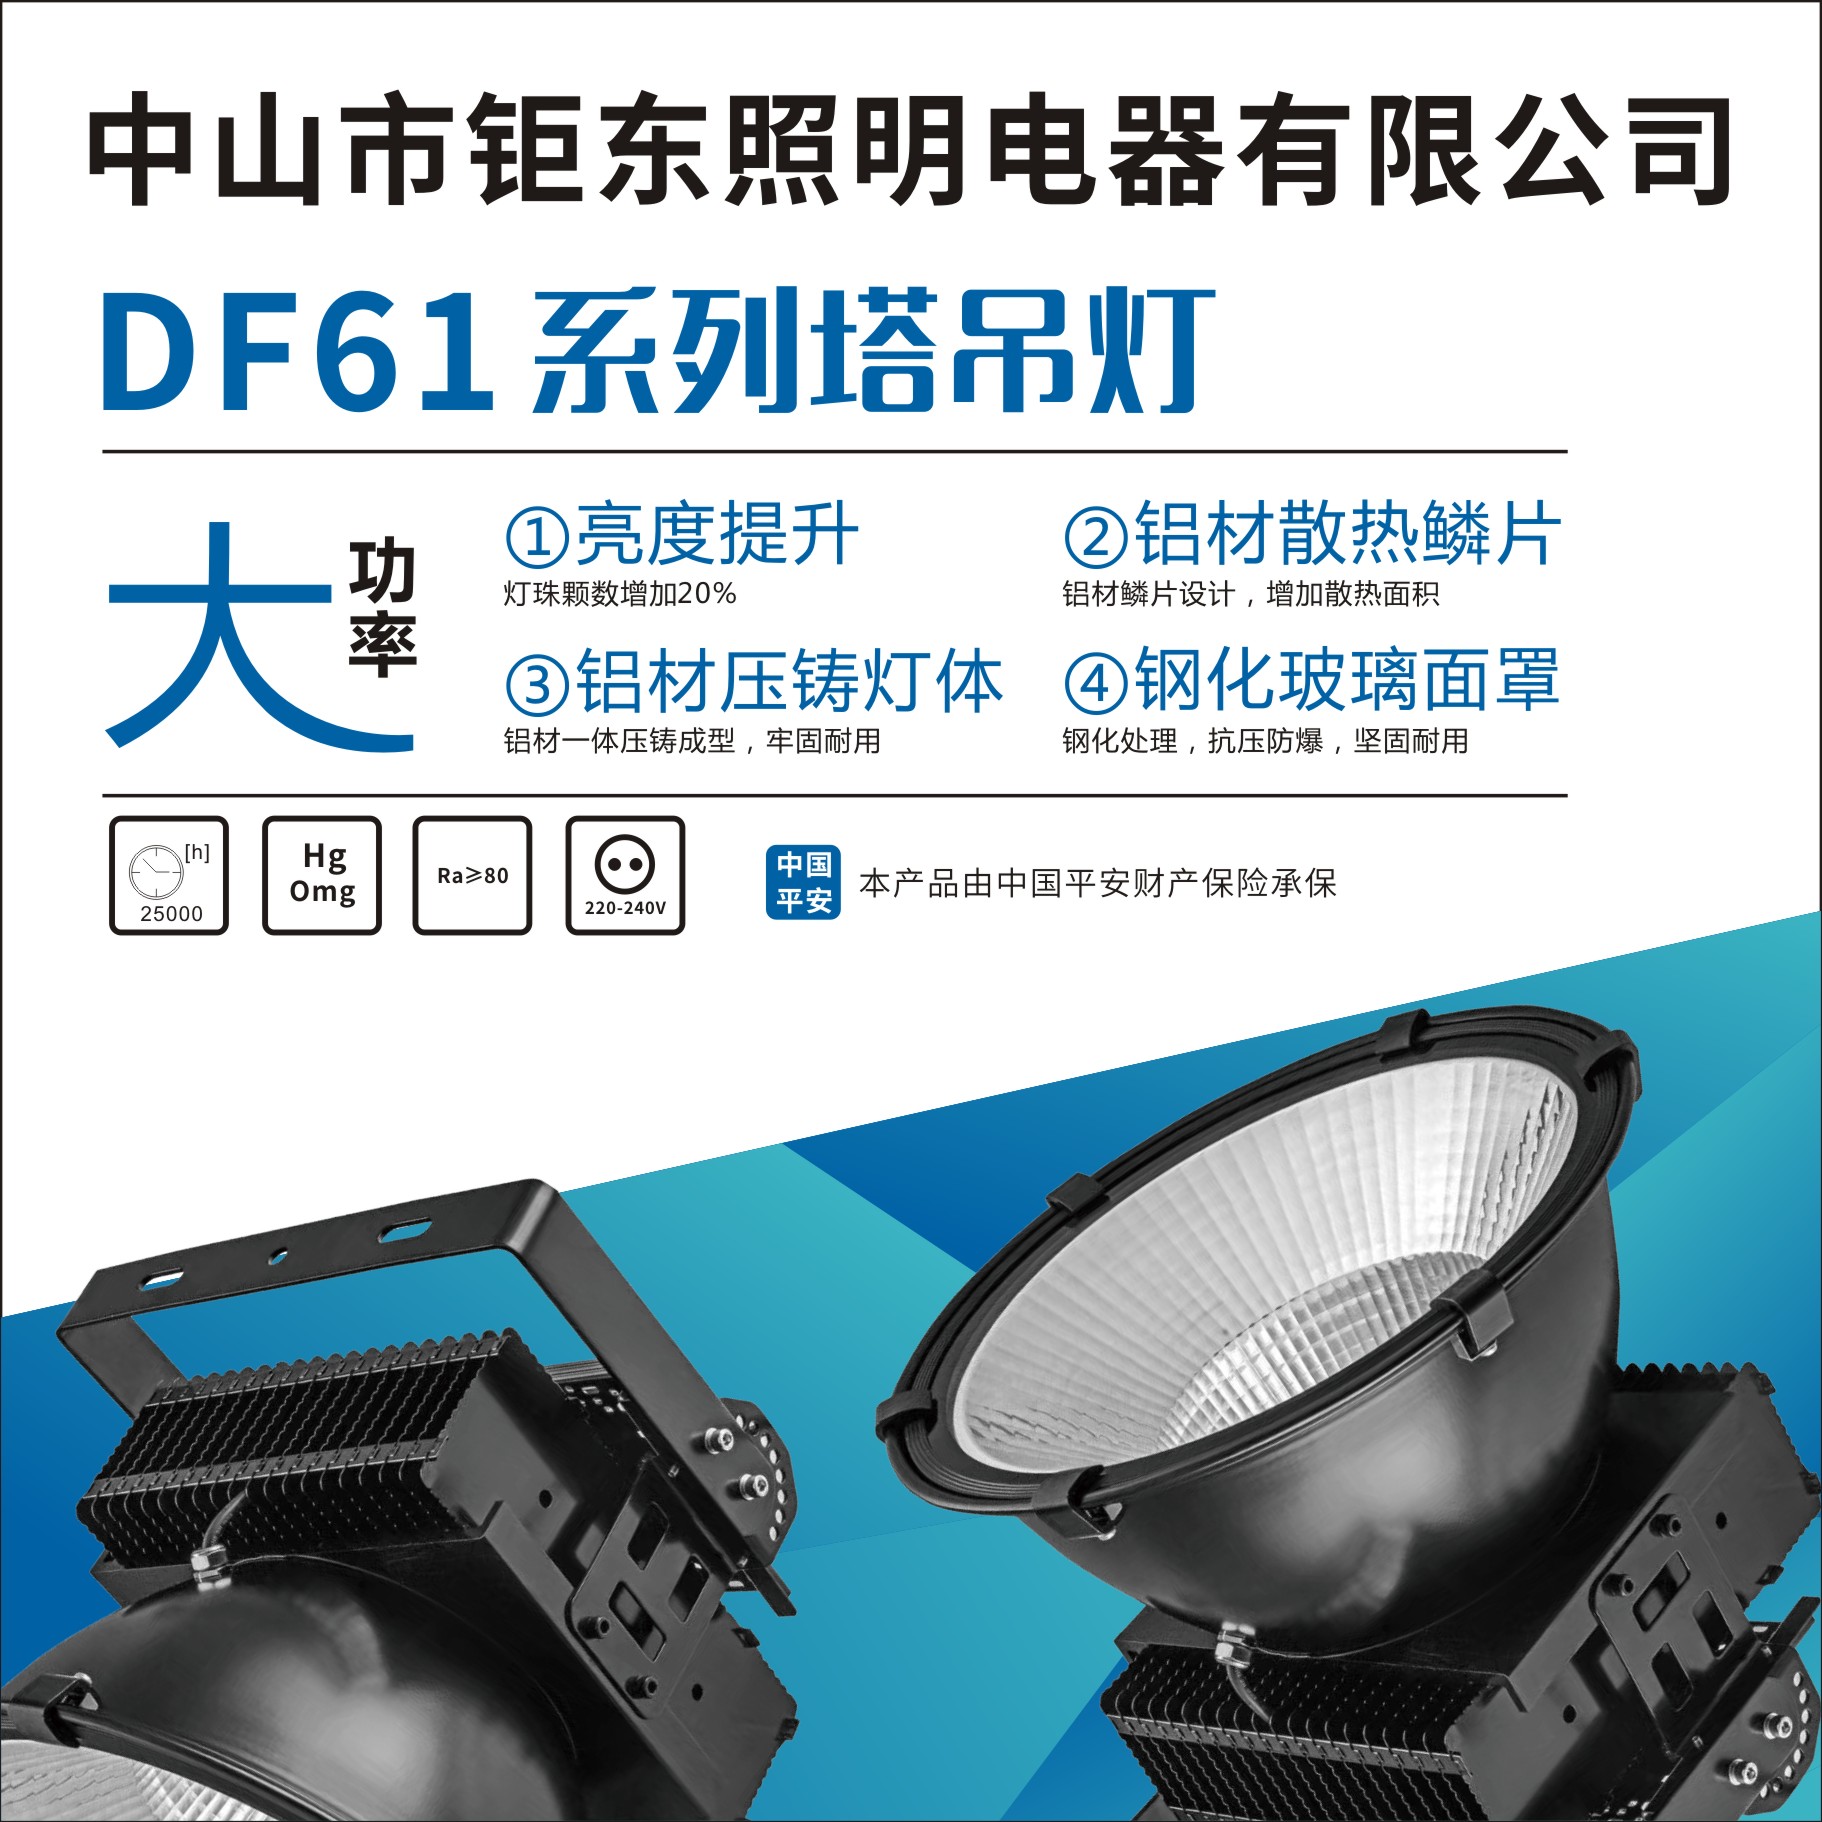 Judong DF61 series tower crane lamp